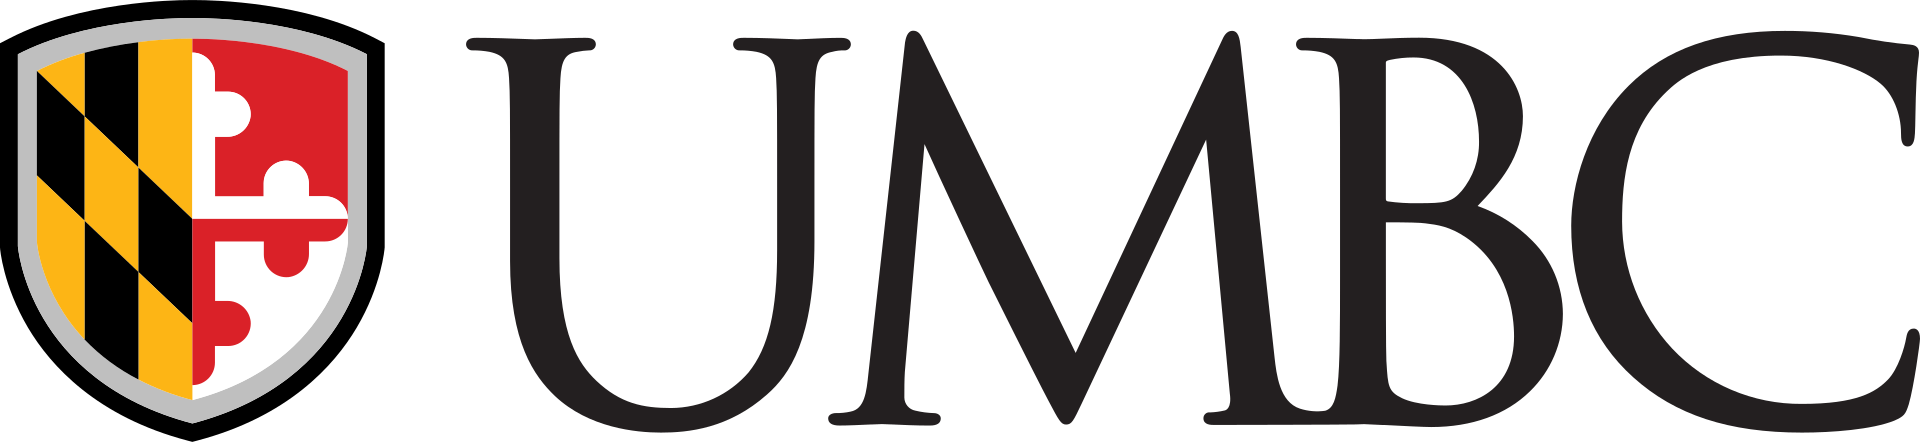 University of Maryland, Baltimore County (UMBC) logo, By University of Maryland, Baltimore County - https://styleguide.umbc.edu/logos/, Public Domain, https://commons.wikimedia.org/w/index.php?curid=67684930"